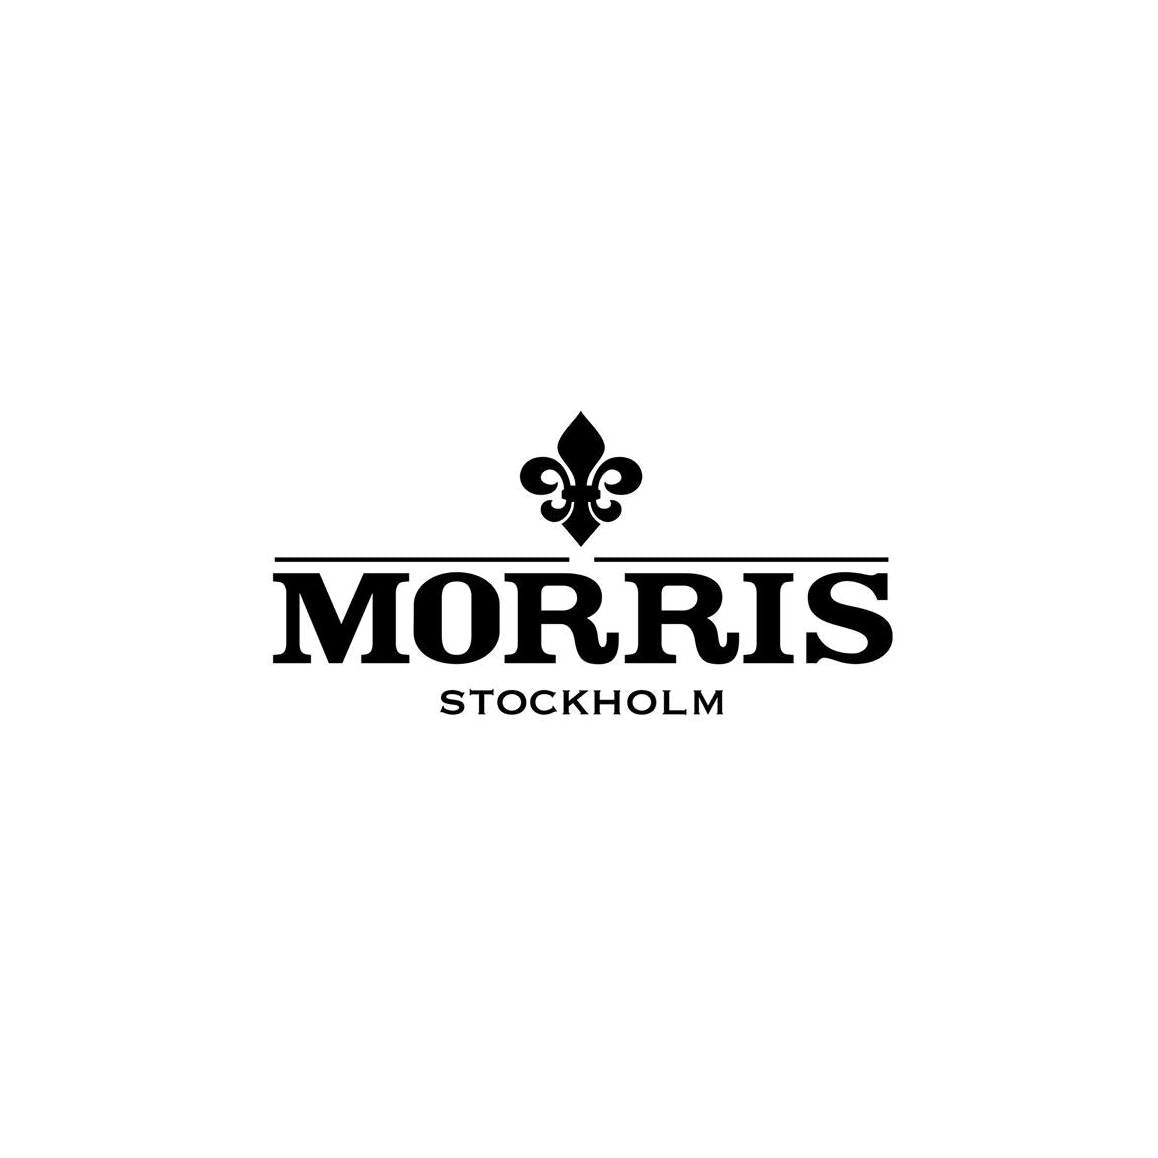 morris-stockholm-logo-Phrase